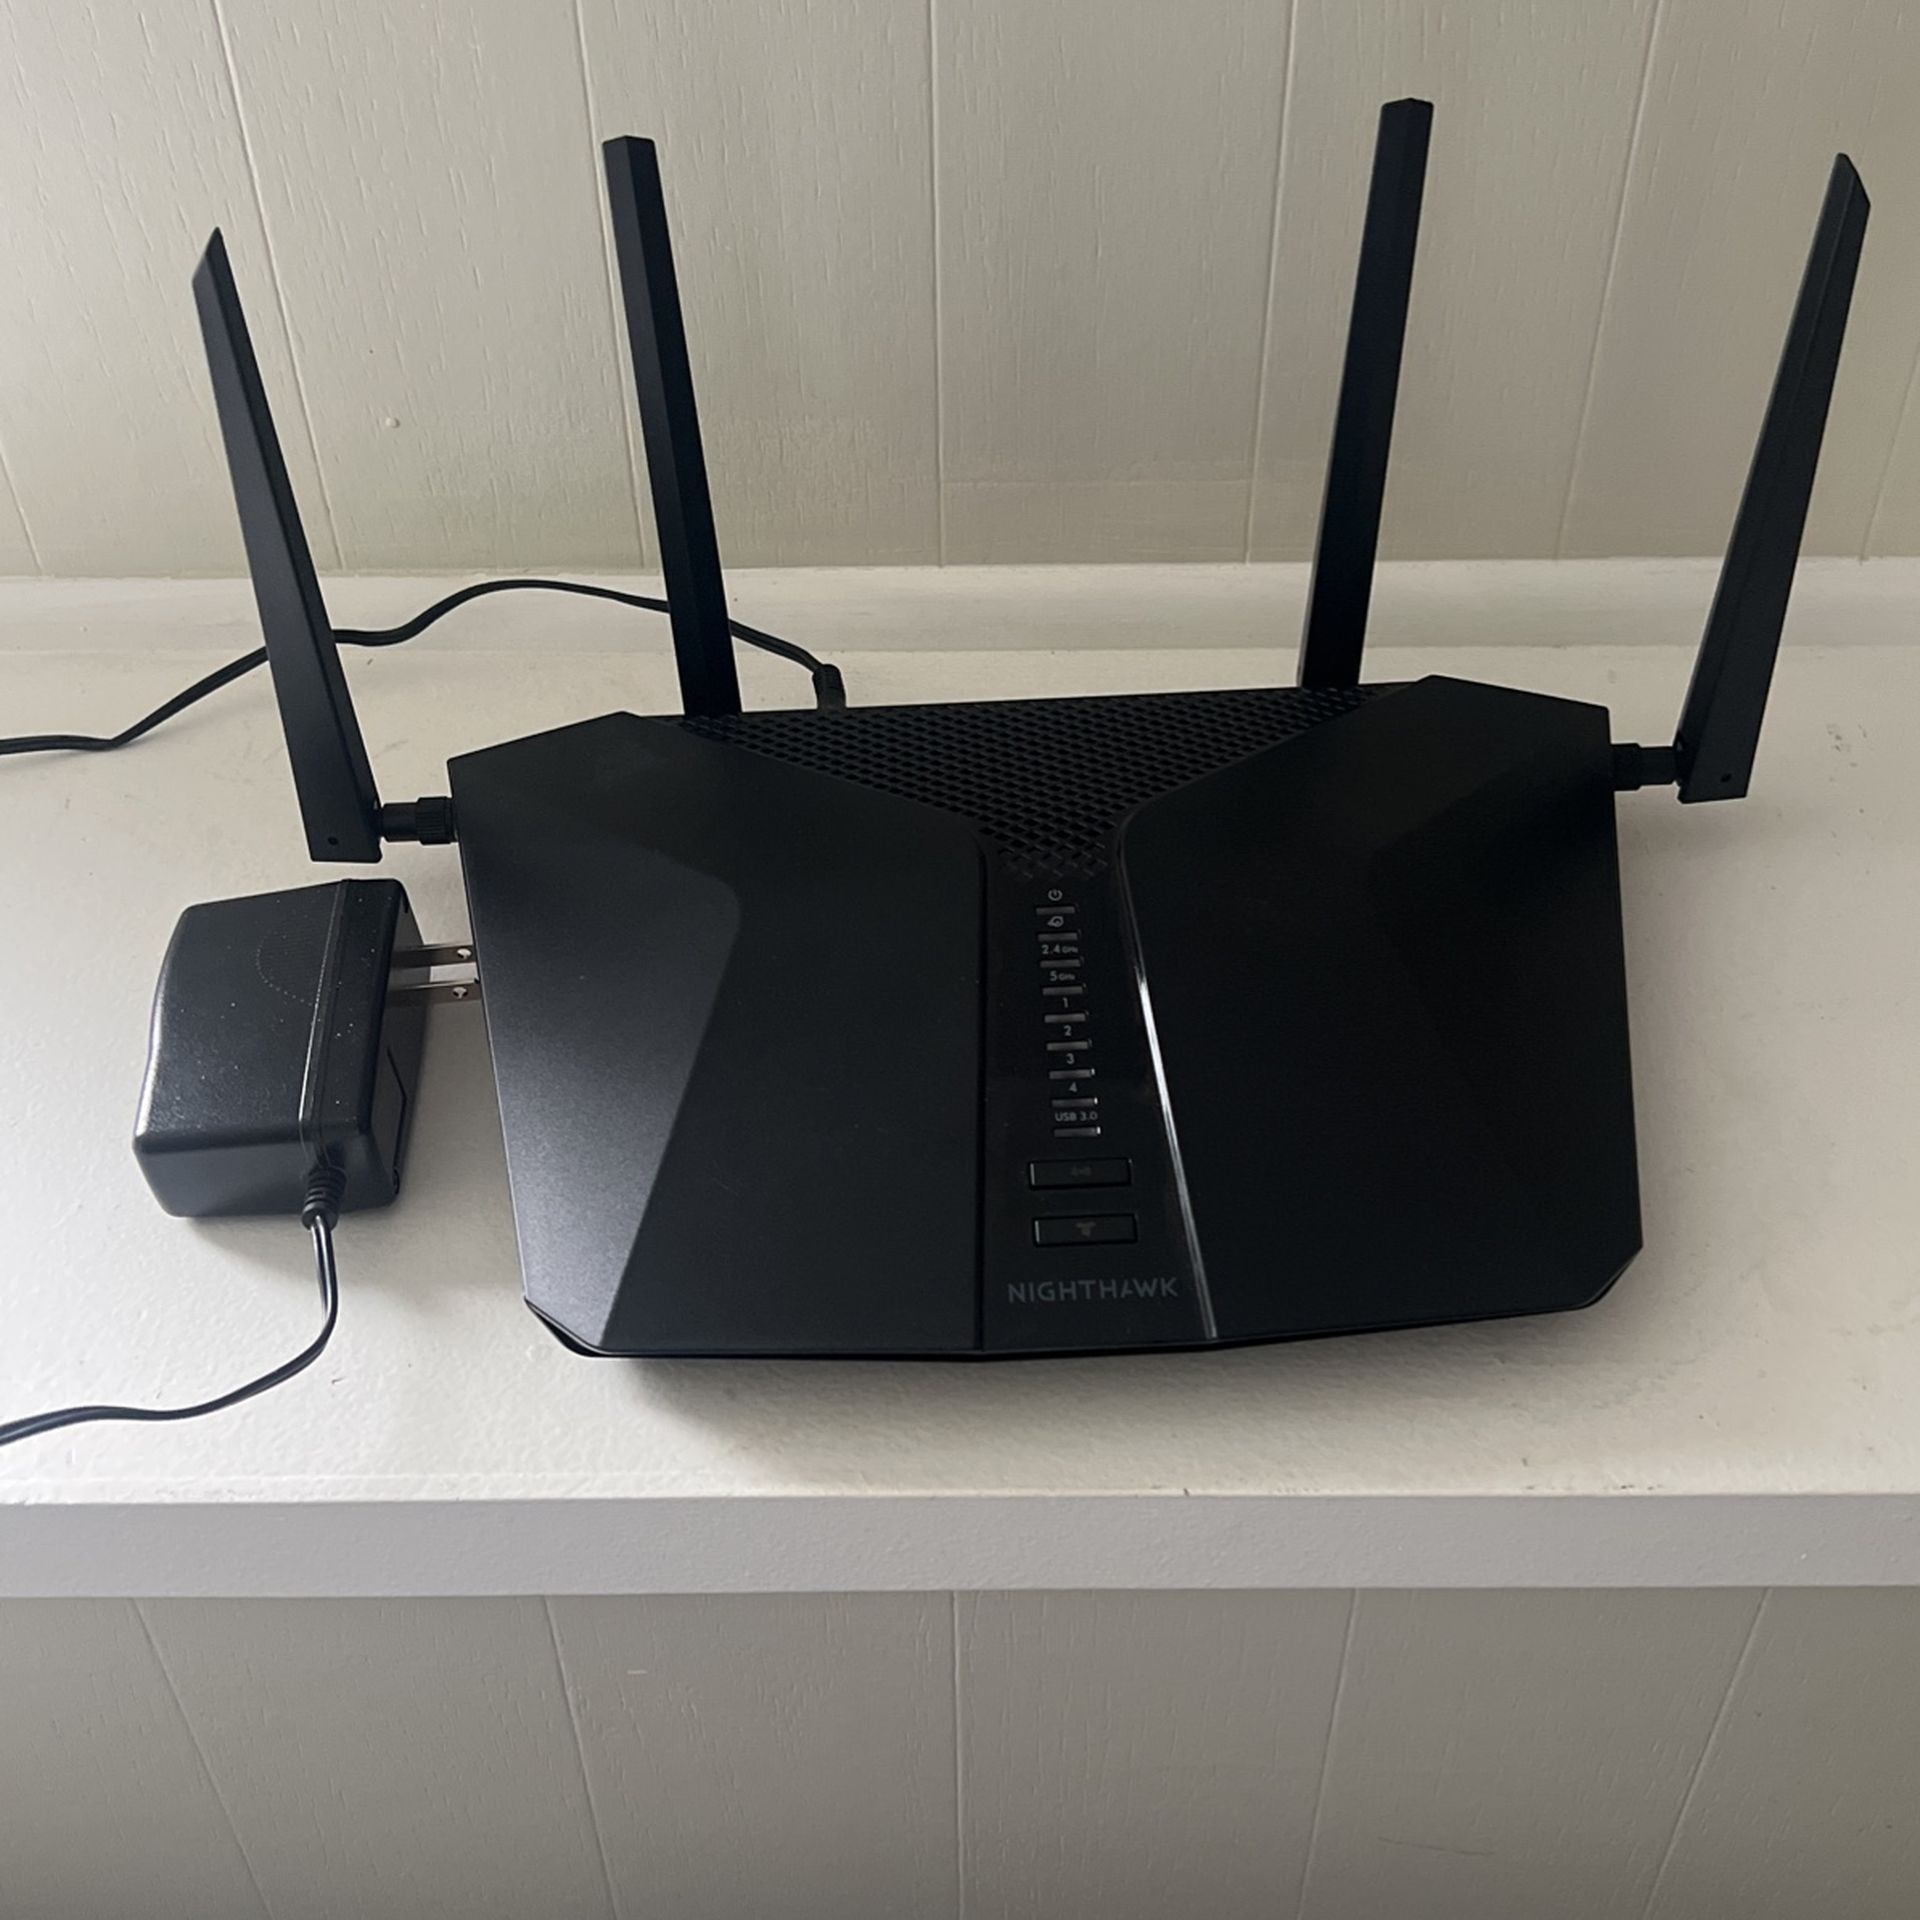 Nighthawk AX6 wireless gaming router